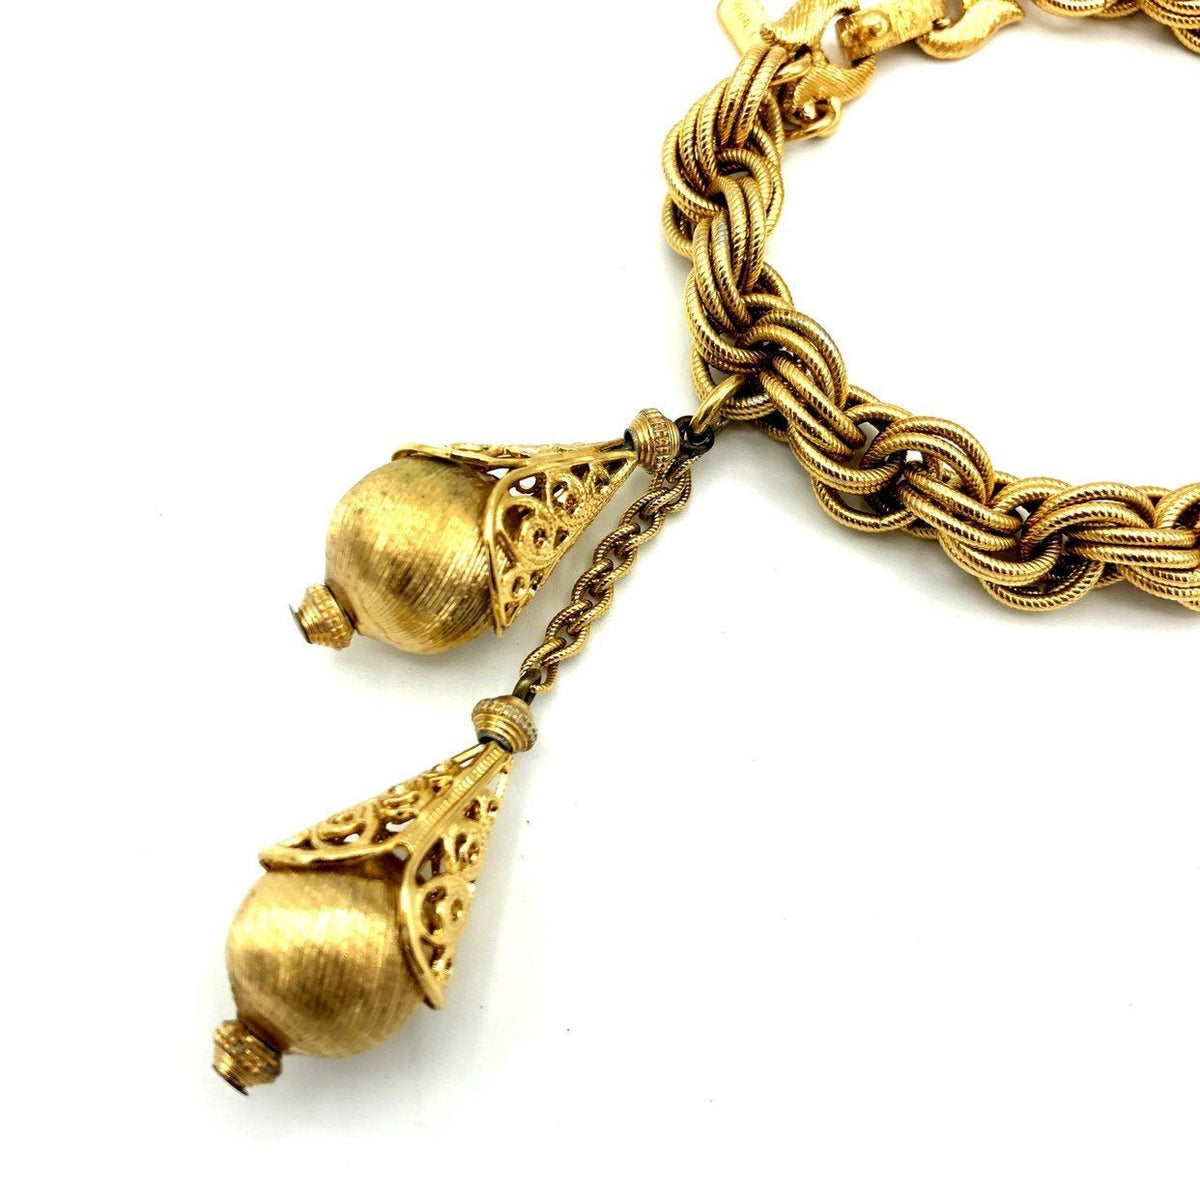 Vintage Monet Gold Chain Slide Stacking Bracelet - 24 Wishes Vintage Jewelry